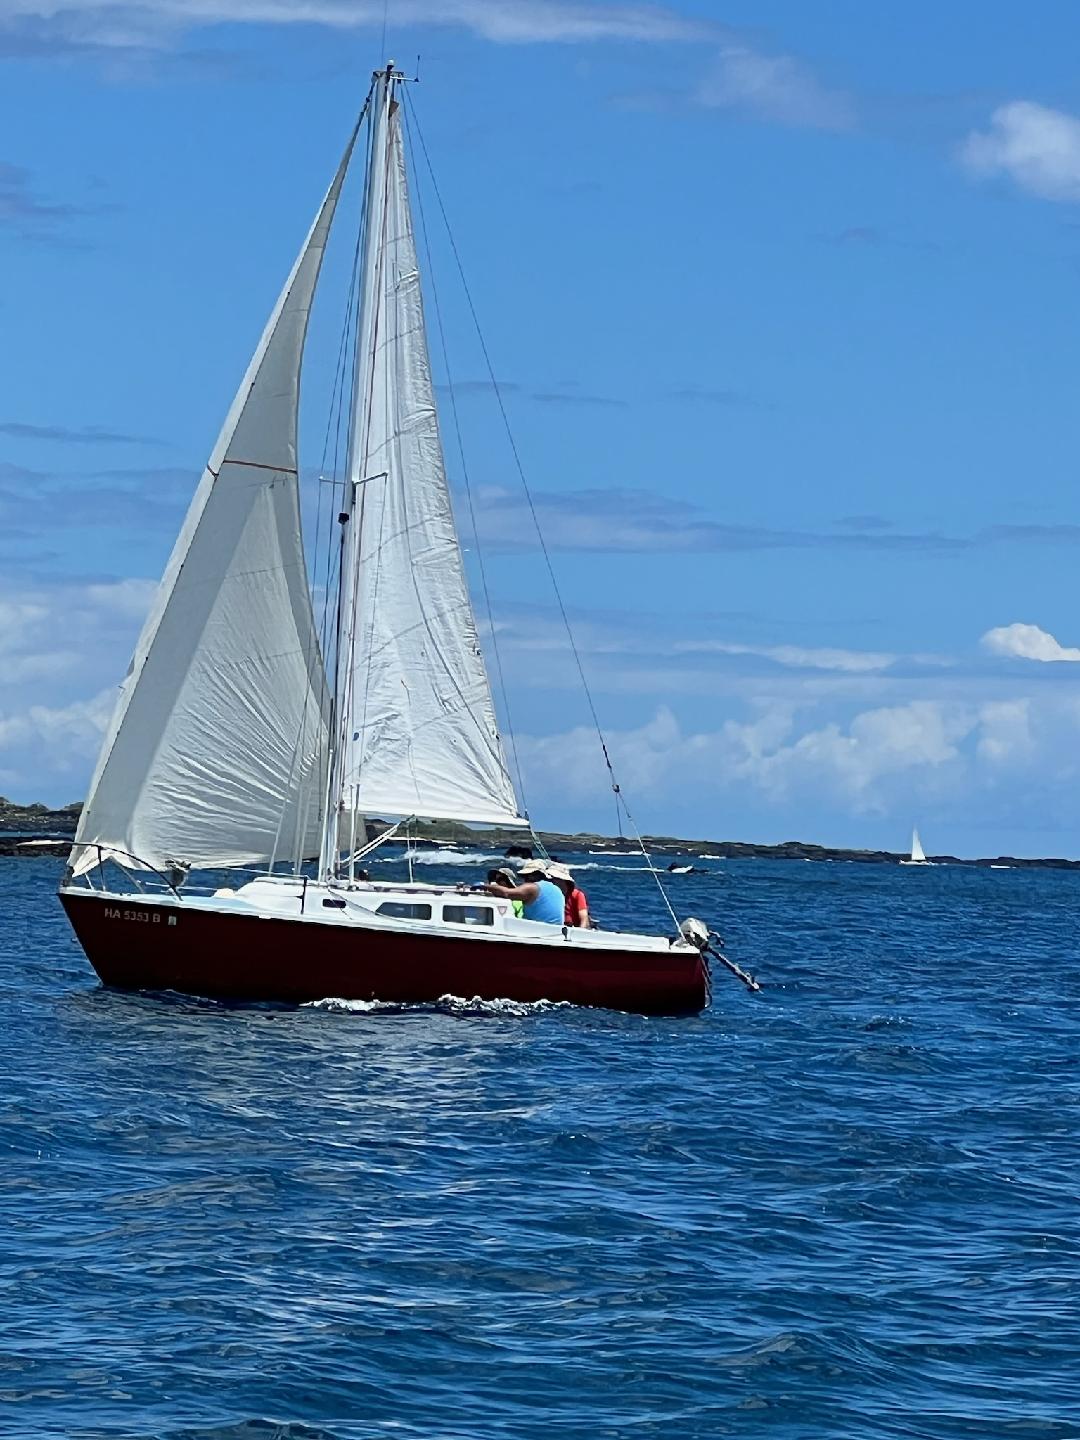 Joe Dubose, Kona Sailing Club Vice Commodore